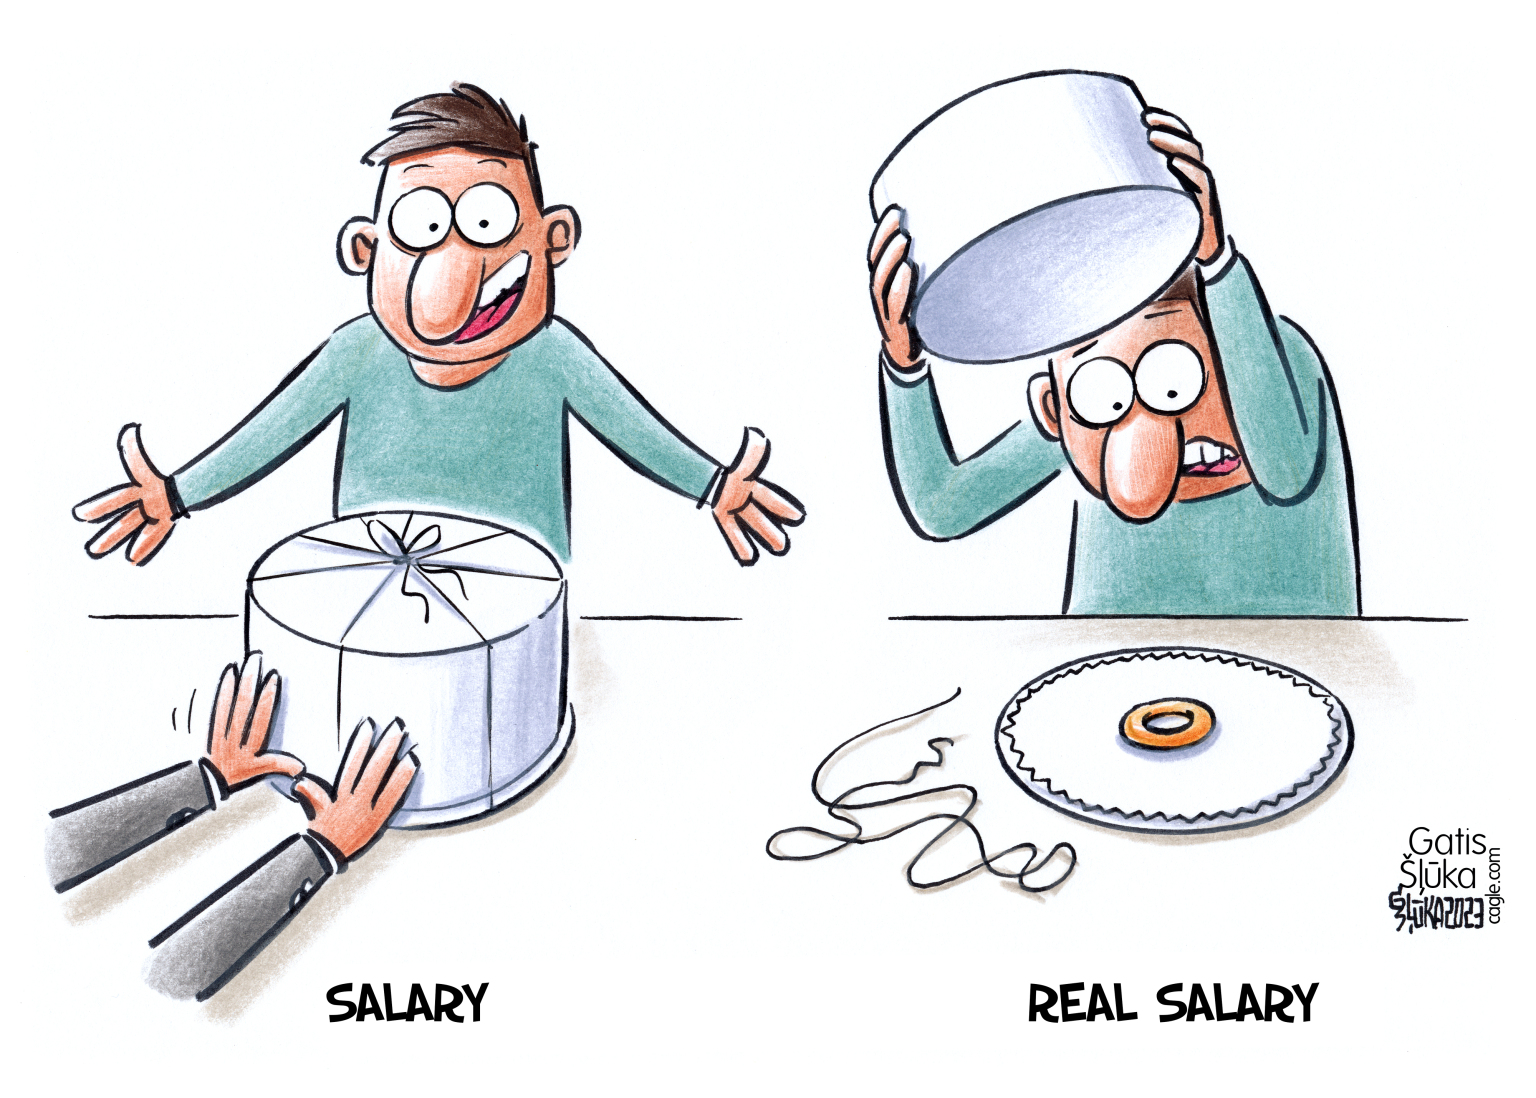 Real salary - By Gatis Sluka